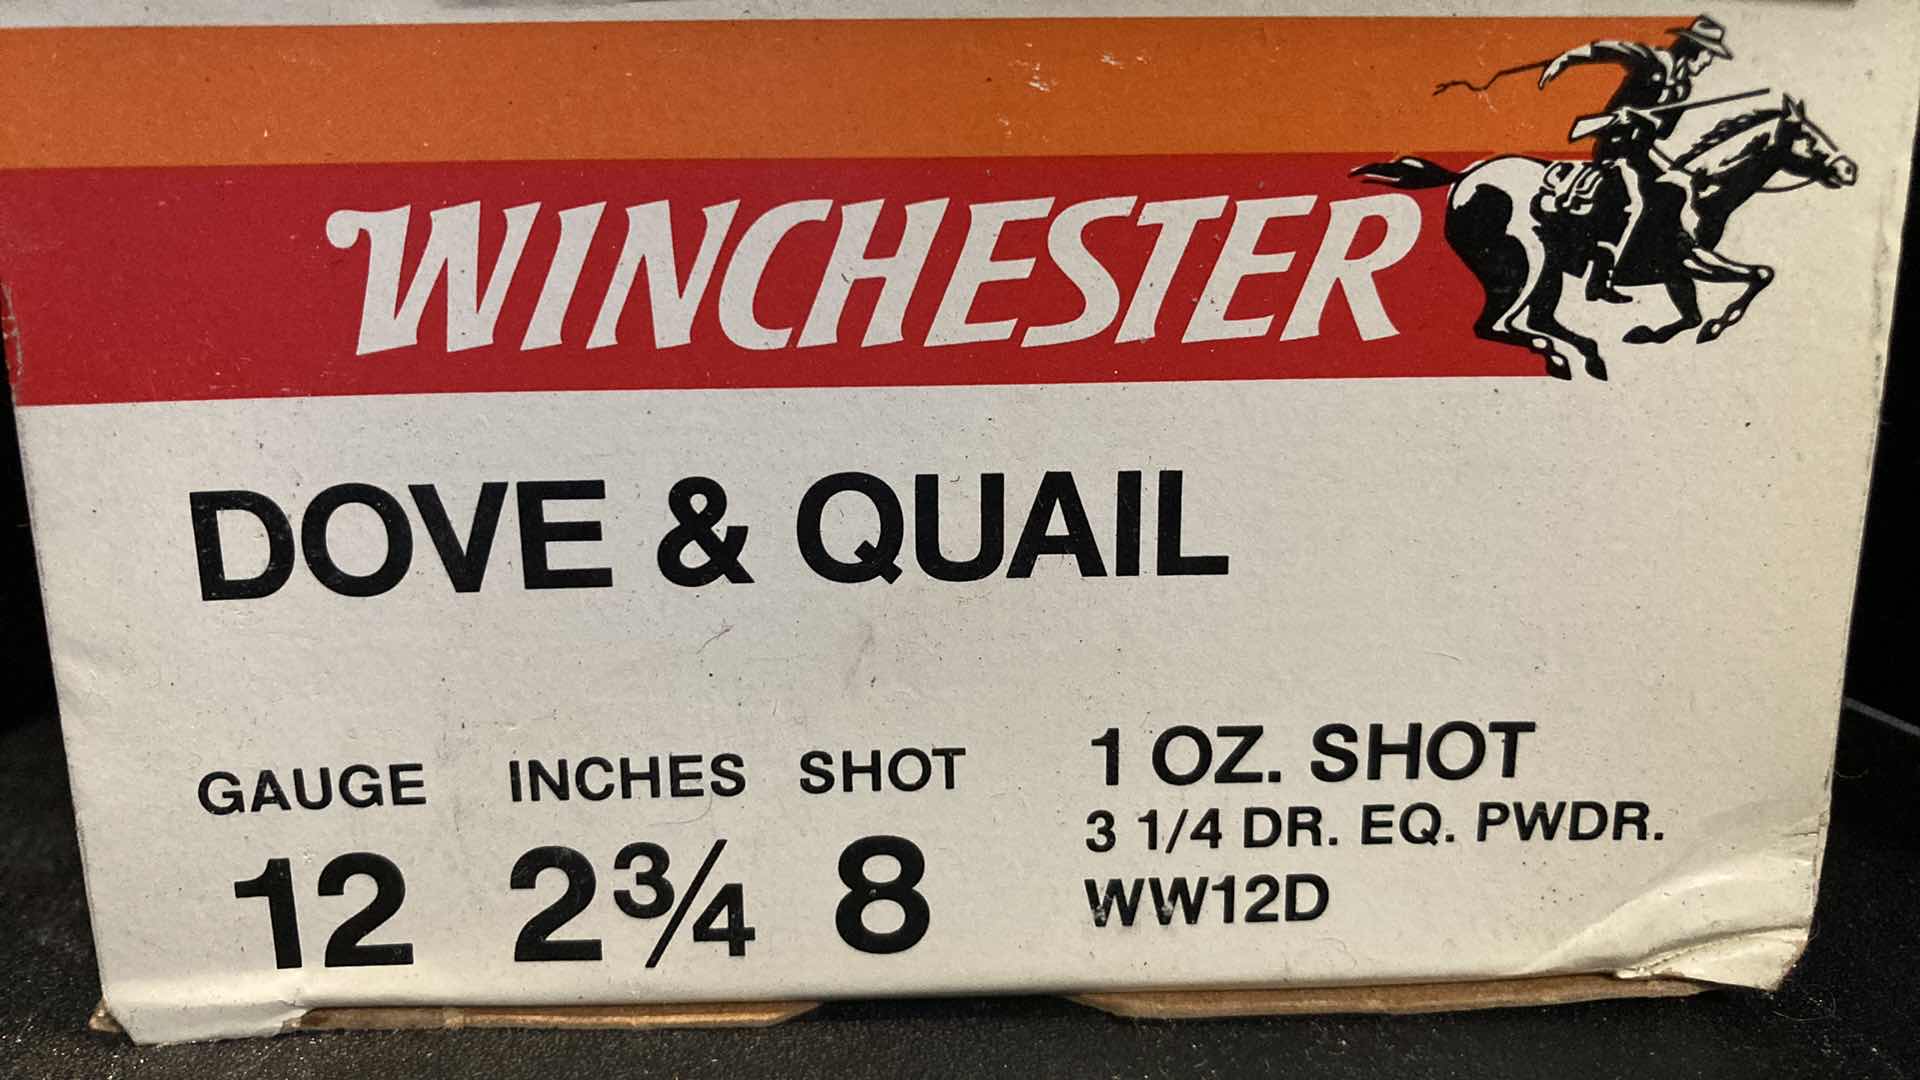 Photo 2 of WINCHESTER 12 GAUGE DOVE & QUAIL SHOT AMMO (67)